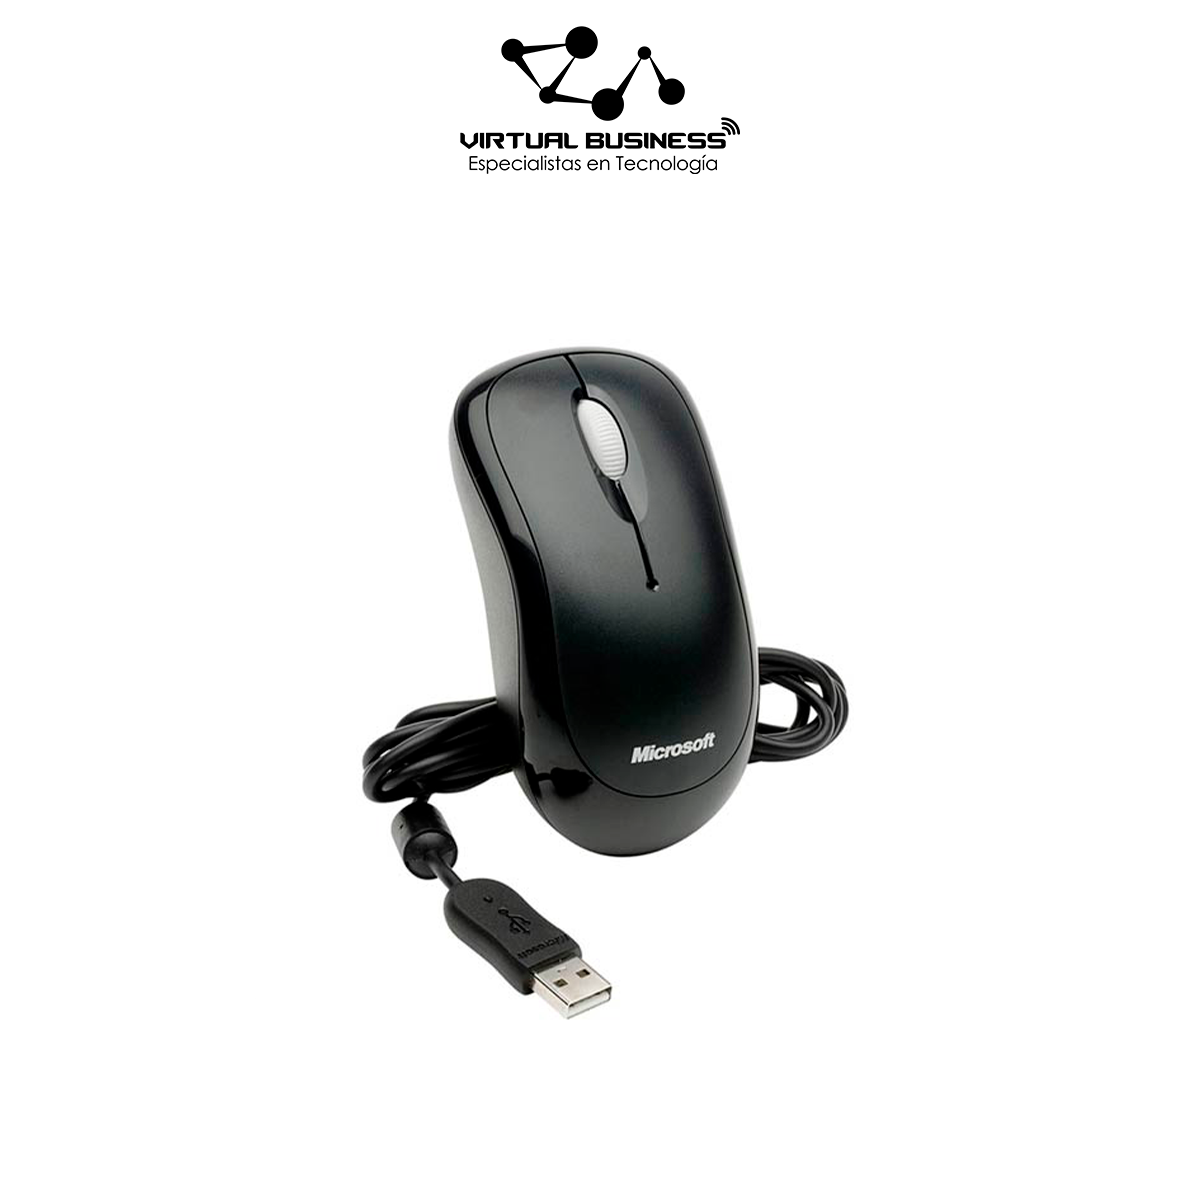 Teclado y Mouse Microsoft 600 Multimedia USB - Ingles